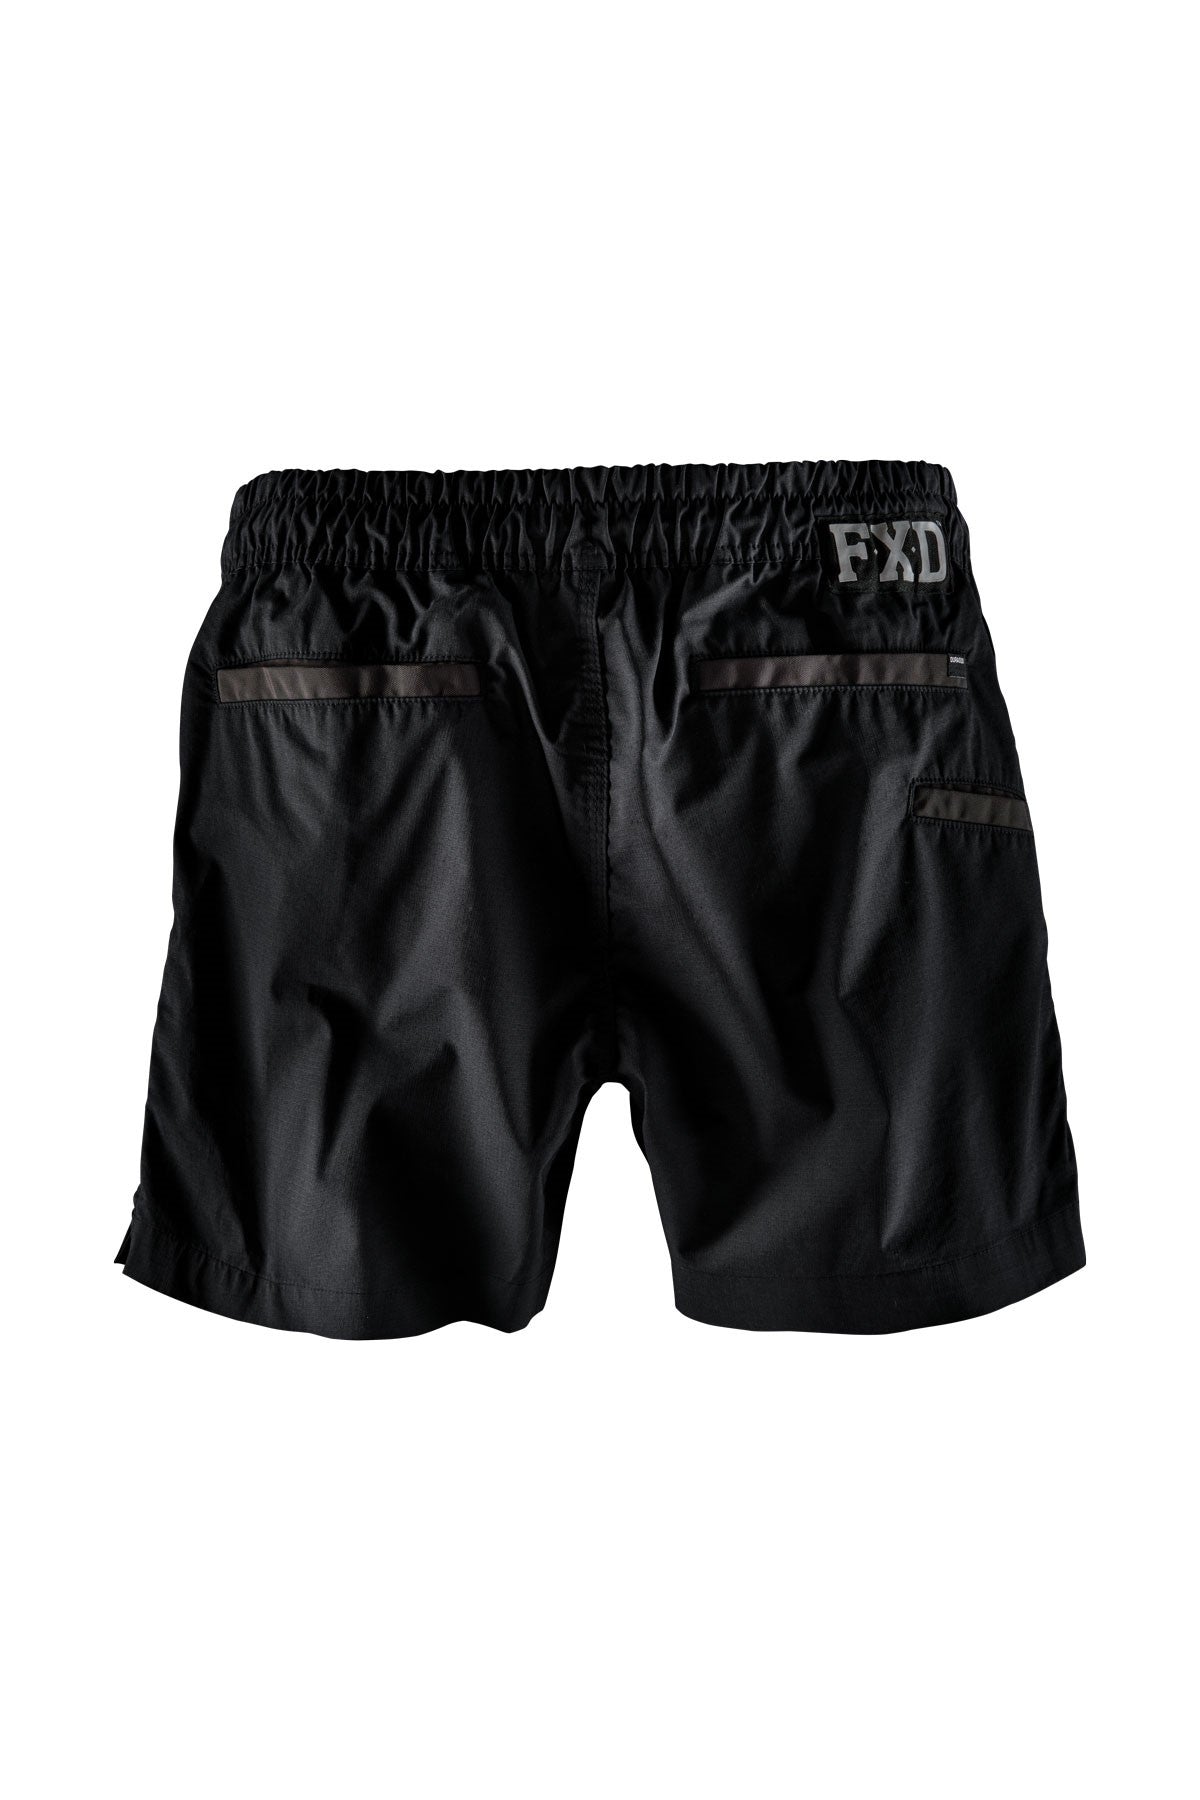 FXD WS-4 Stretch Elastic Waist Shorts